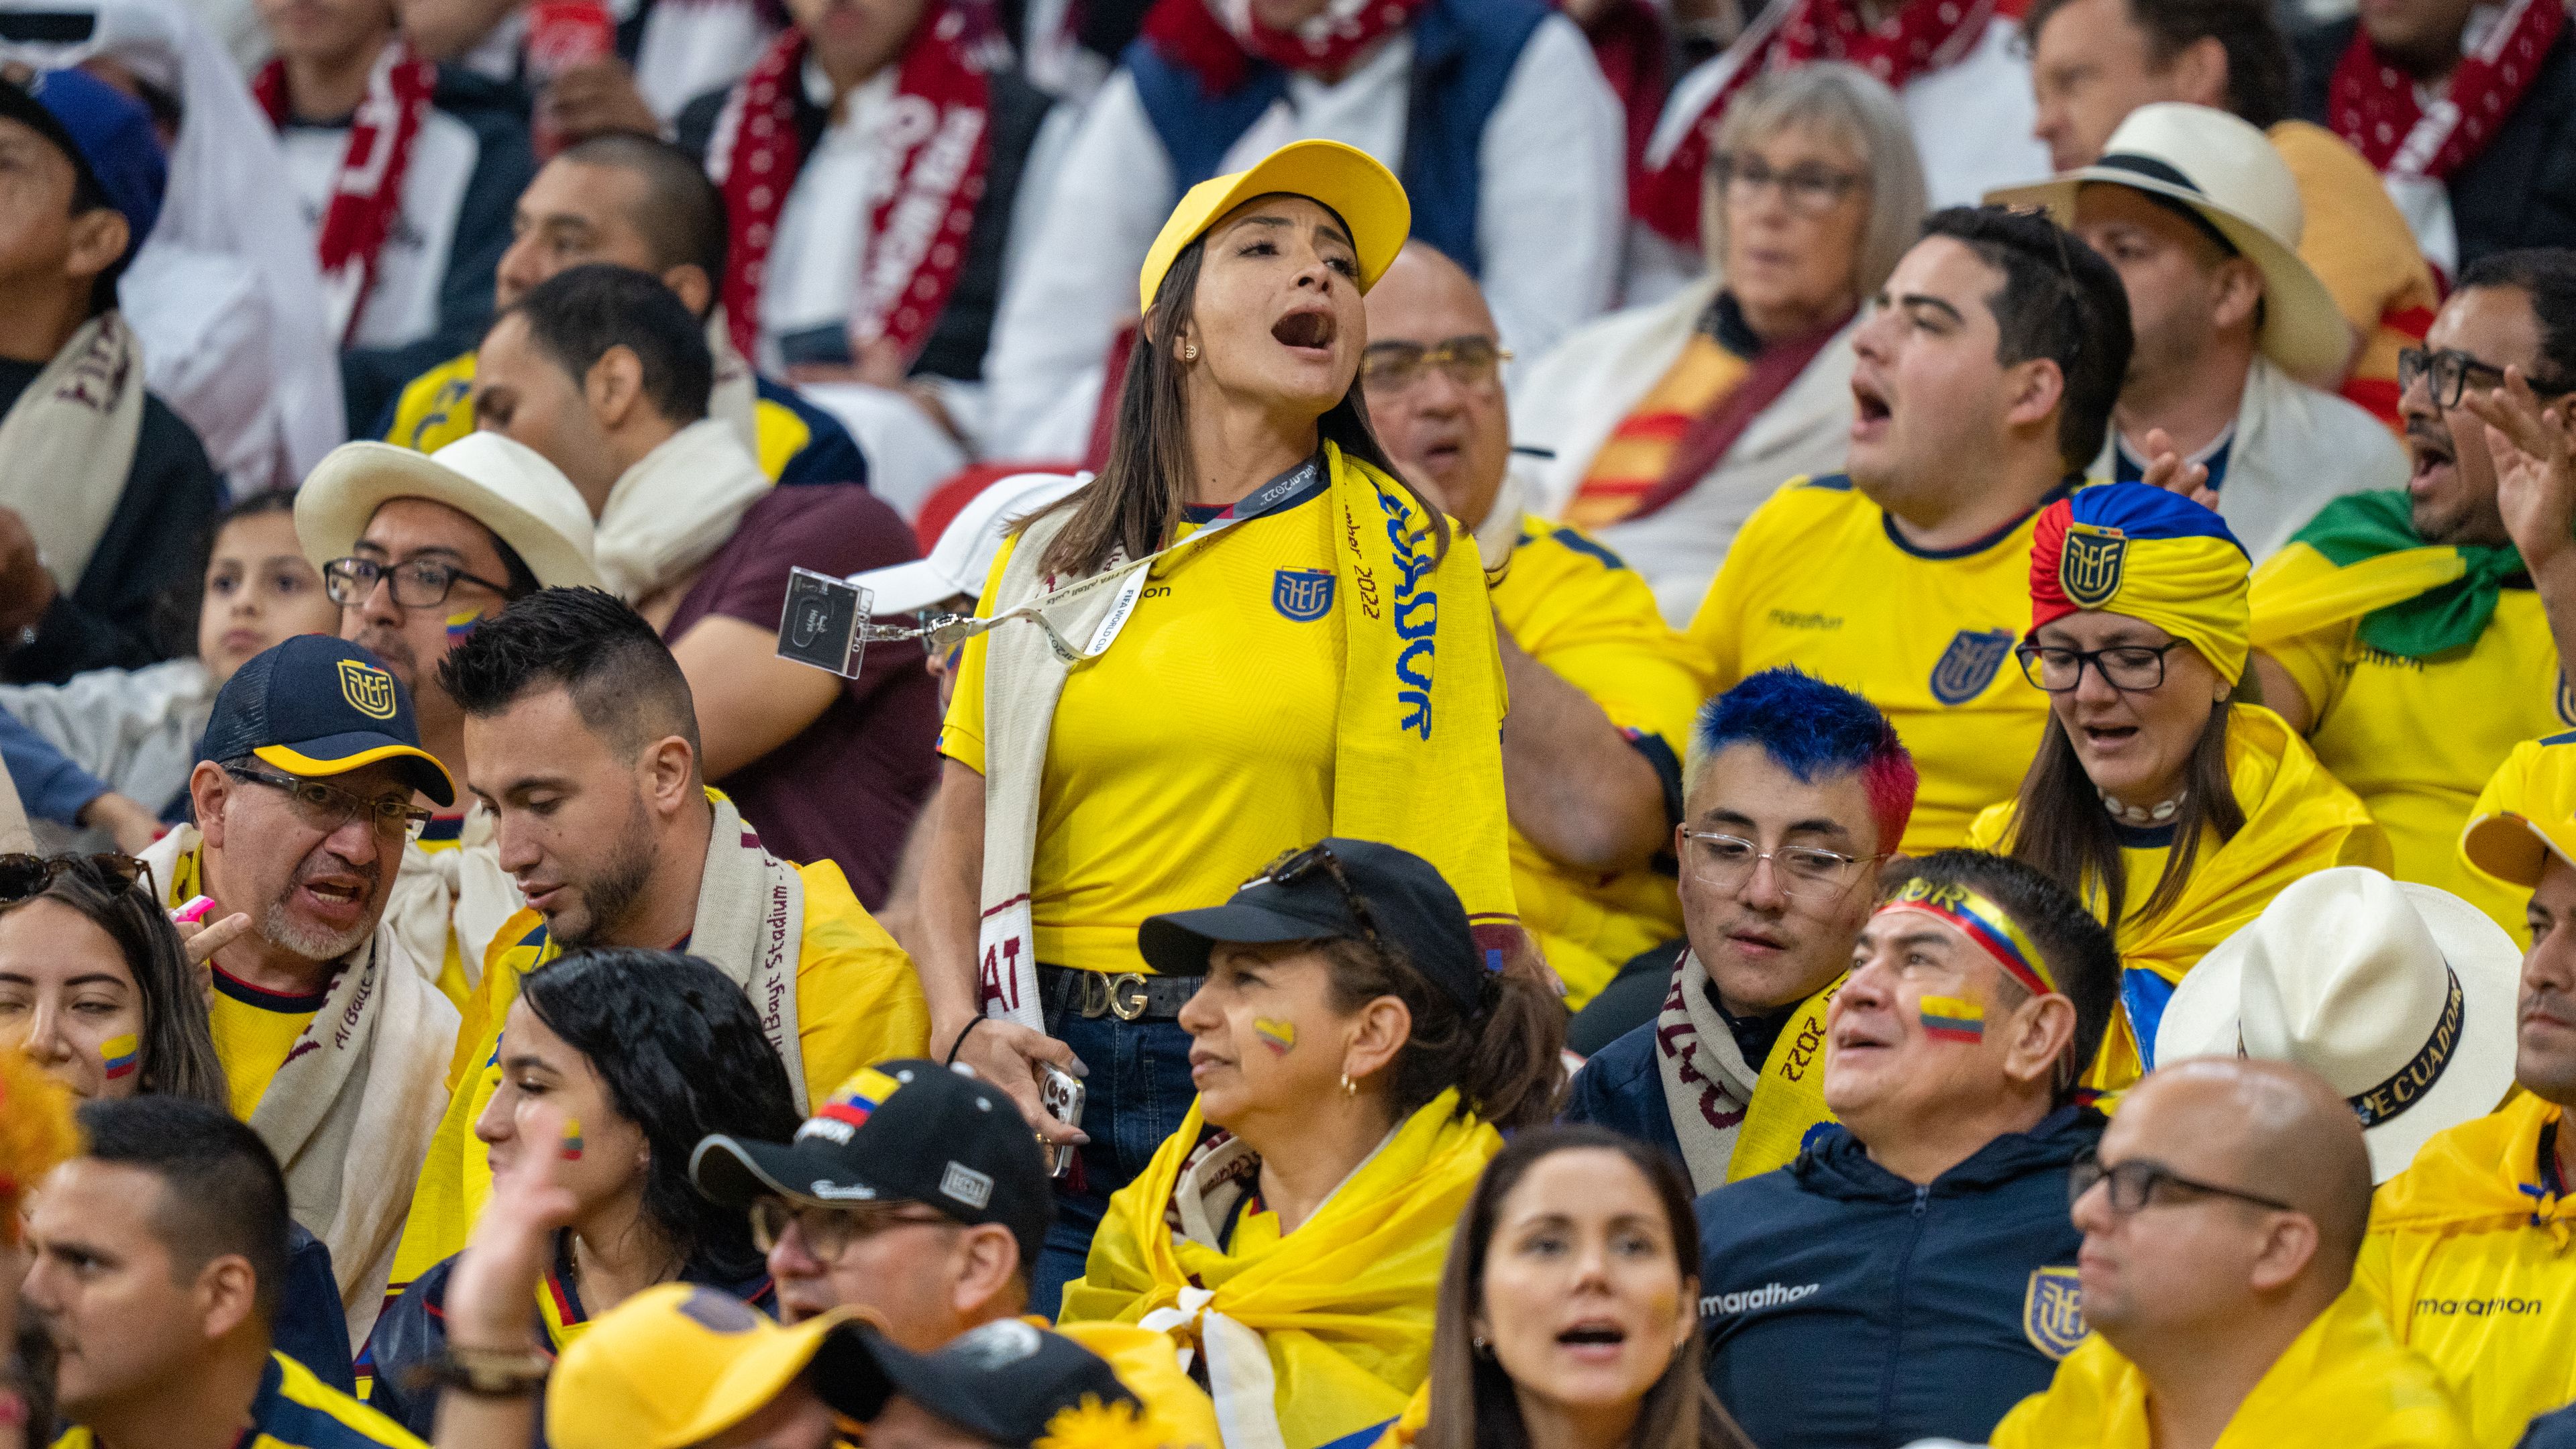 AL KHOR CITY, QATAR - NOVEMBER 20: An Ecuador fan cheers before during the FIFA World Cup Qatar 2022 Group A match between Ecuador and Qatar at Al Bayt Stadium on November 20, 2022 in Al Khor City, Qatar. (Photo by Doug Zimmerman /ISI Photos/Getty Images)